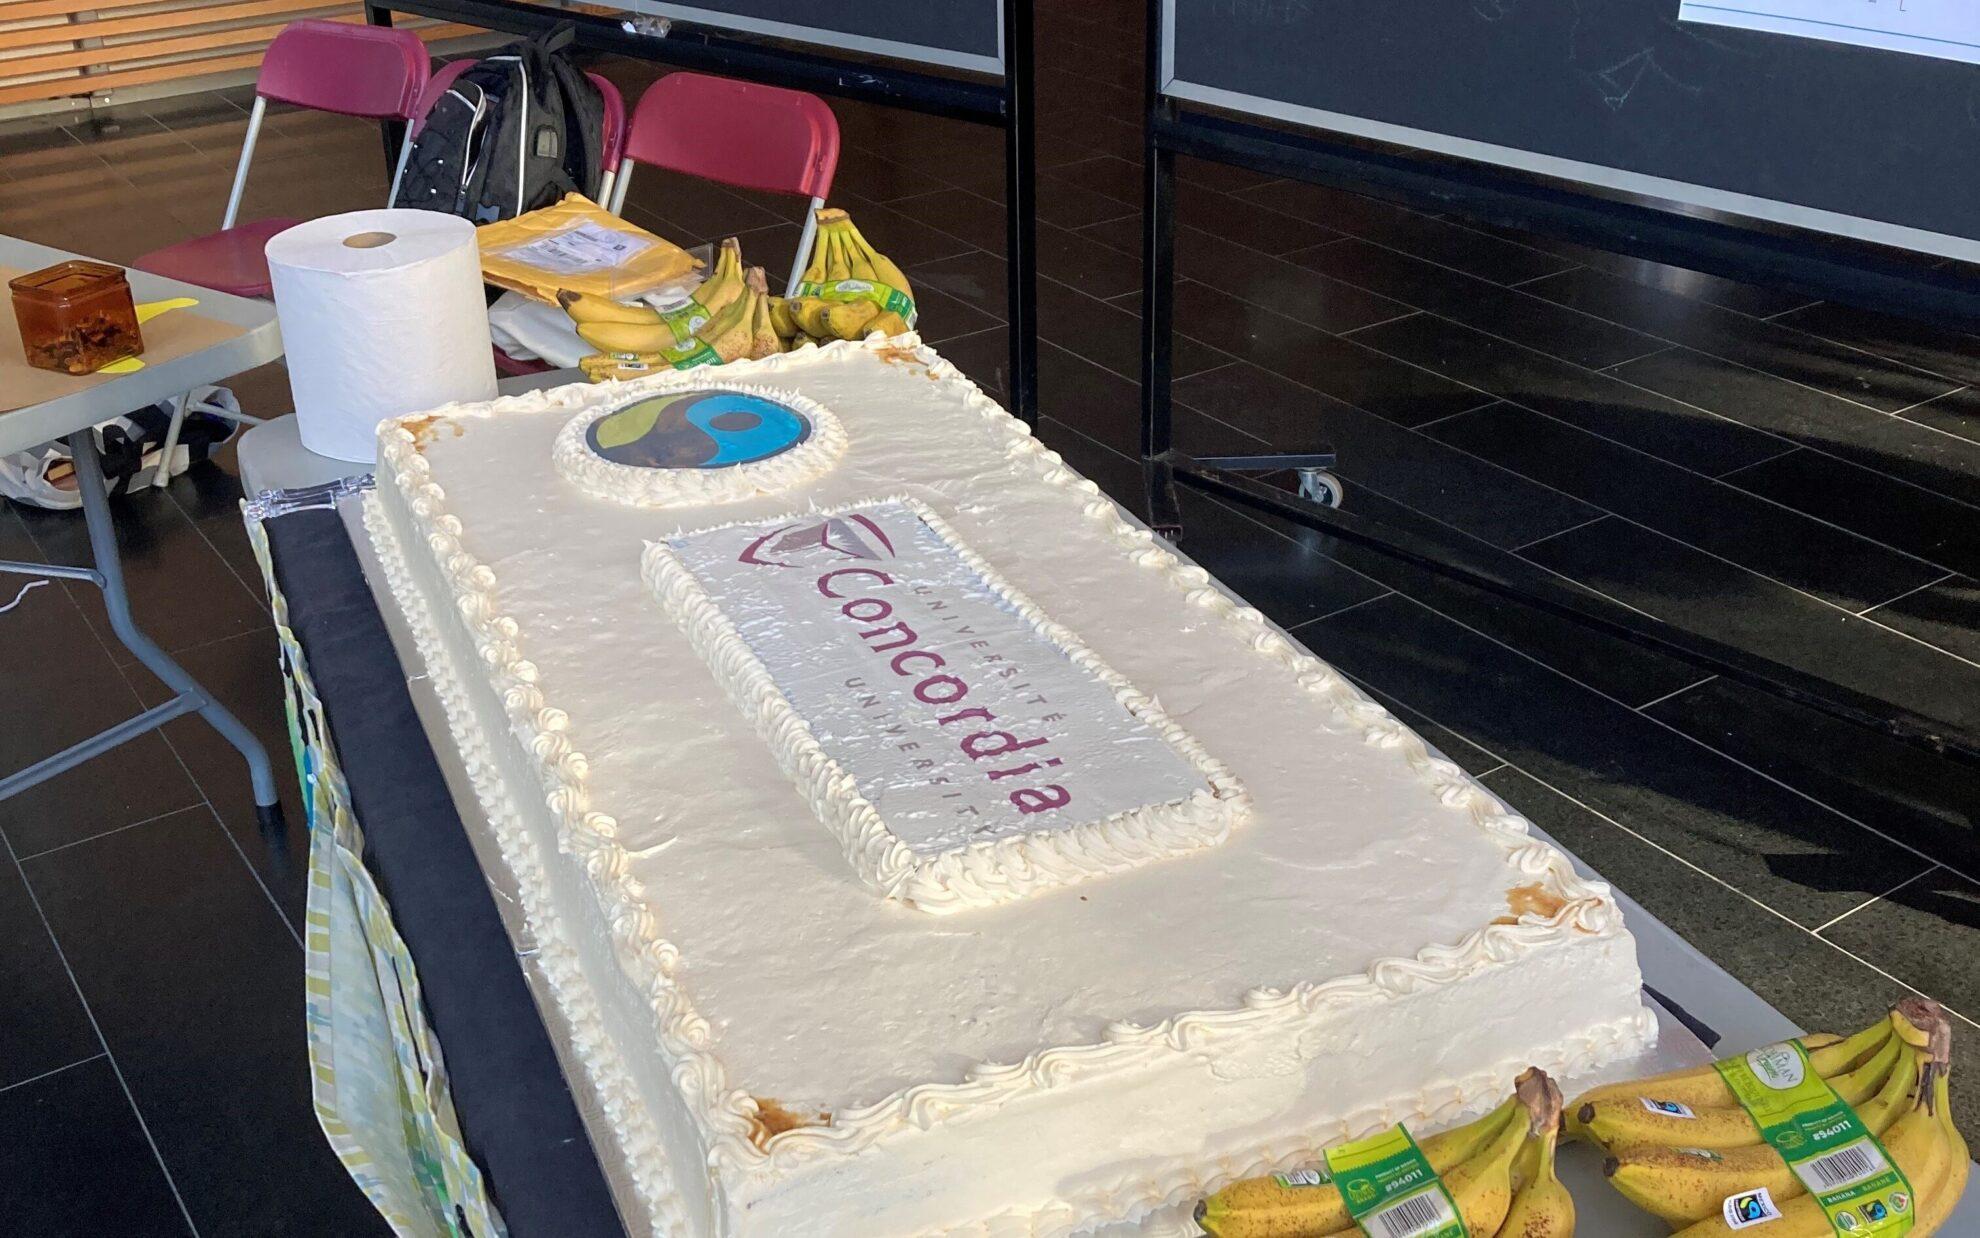 A 200-lb Fairtrade banana cake prepared by Concordia